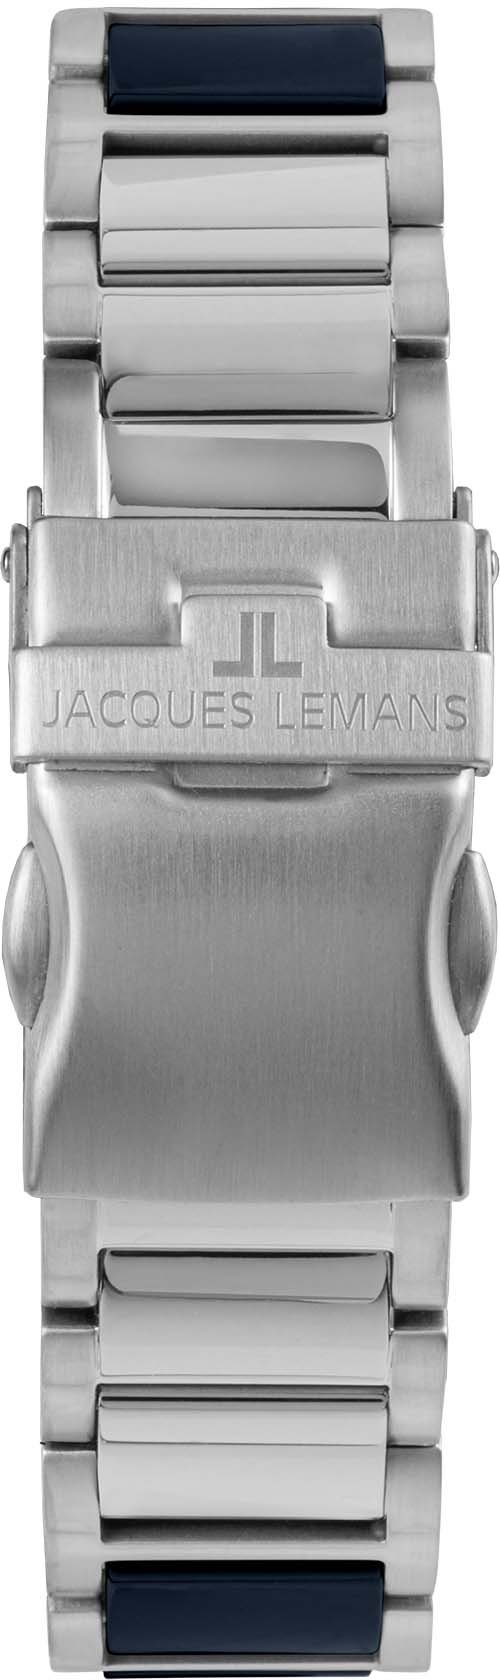 Jacques Lemans Keramikuhr Liverpool, dunkelblau 42-12B